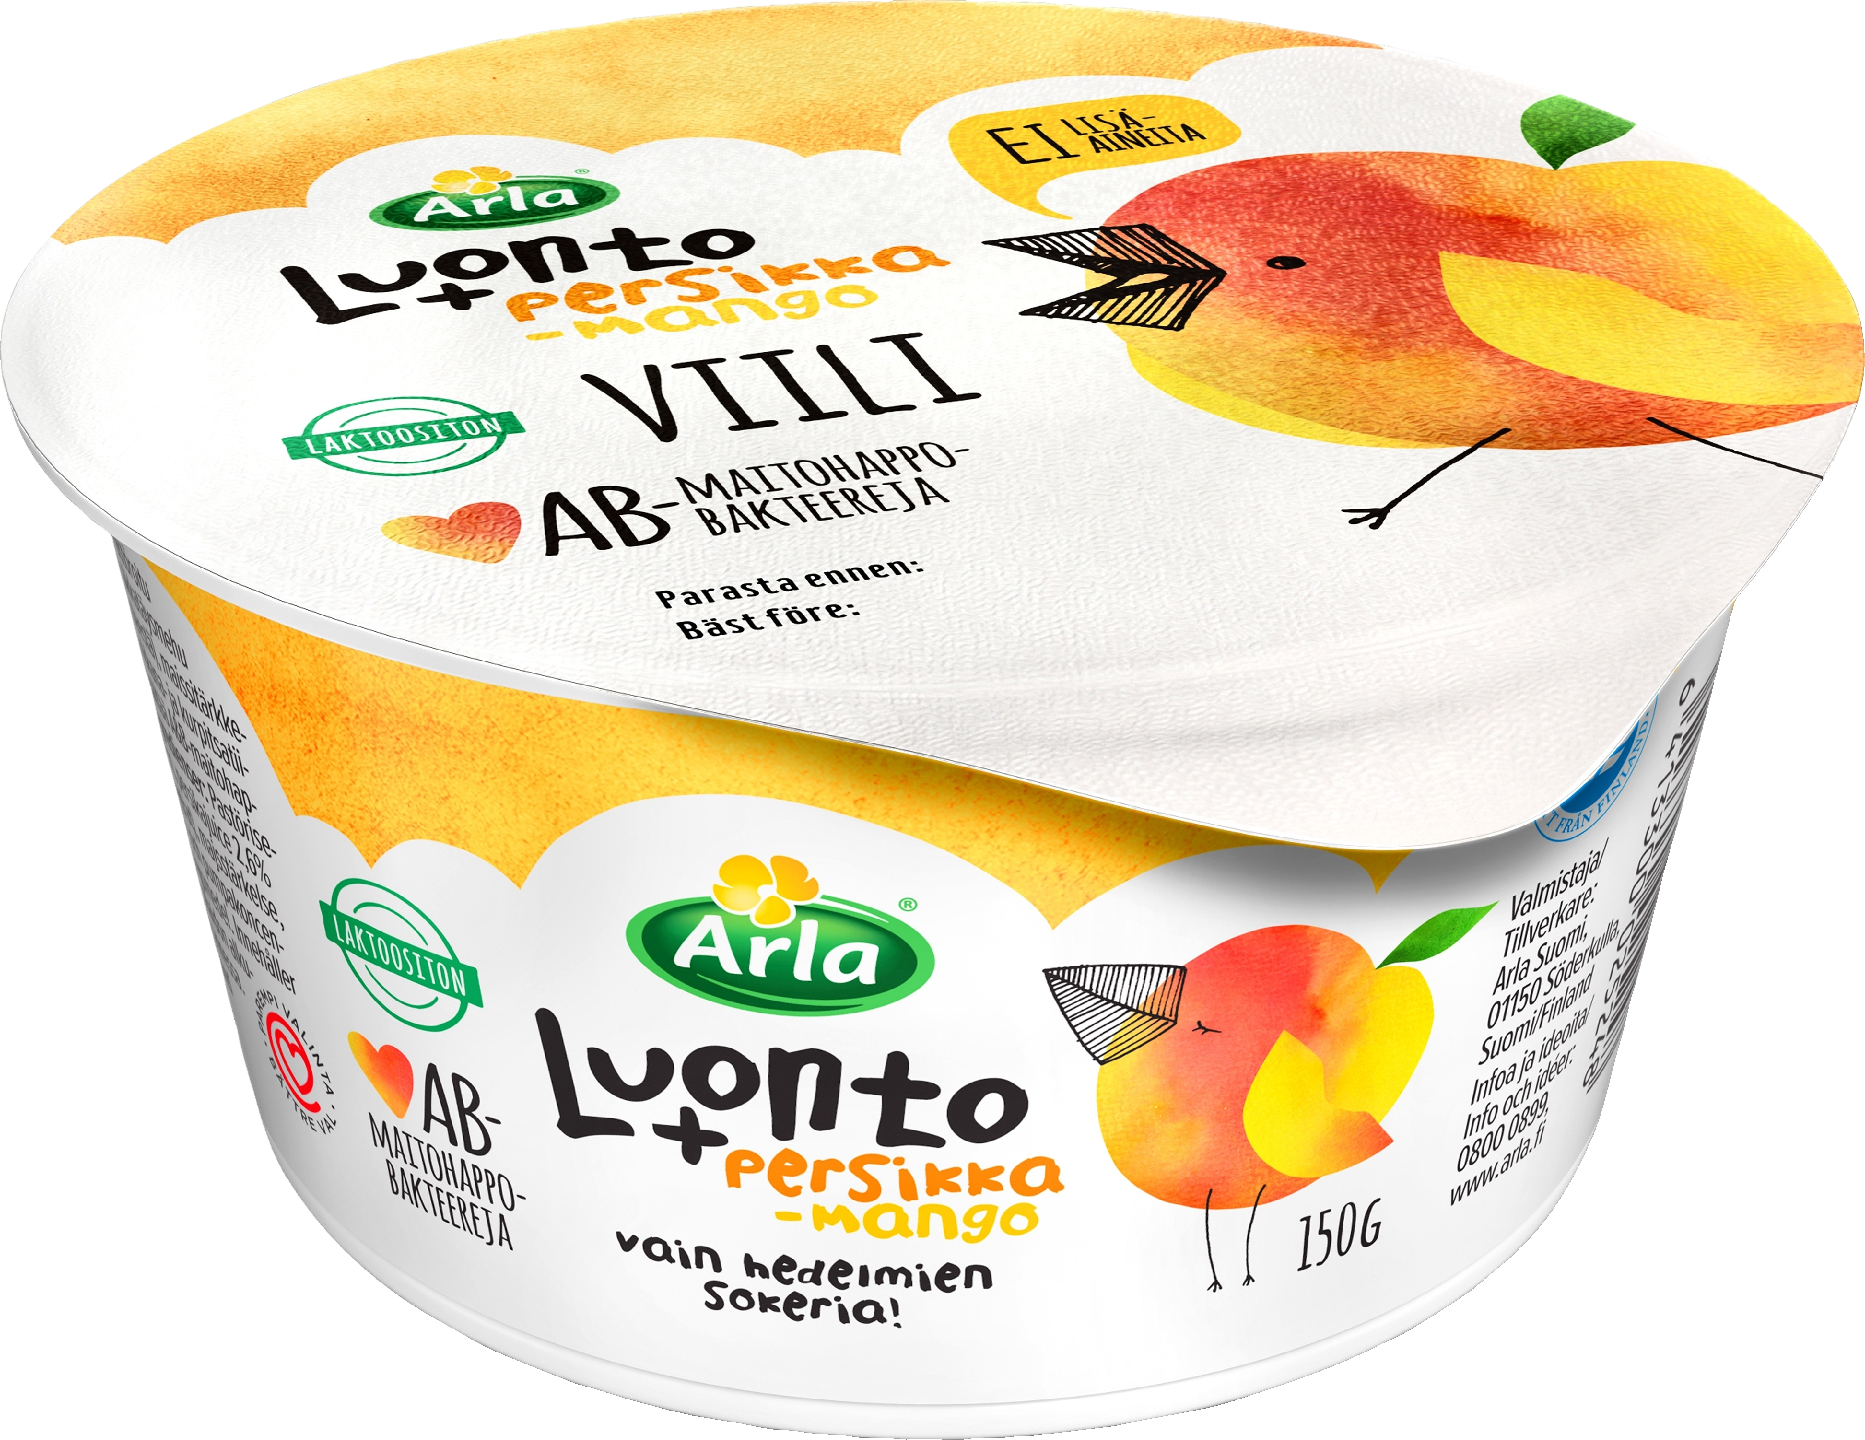 Arla Luonto+ AB viili 150g persikka-mango laktoositon